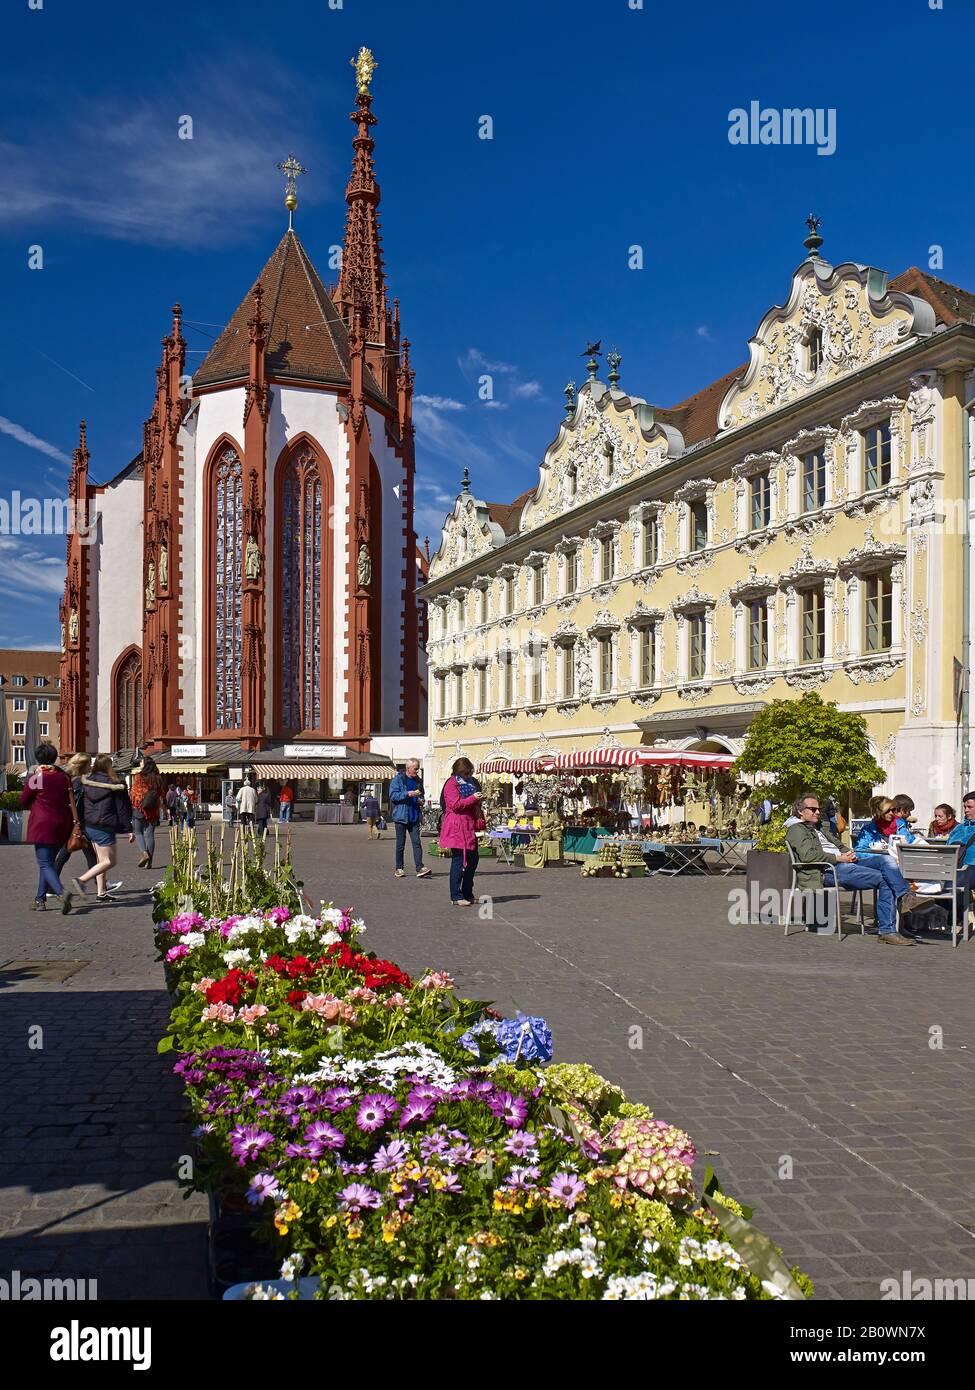 Upper market with Marienkapelle and Falkenhaus, Wuerzburg, Lower Franconia, Bavaria, Germany, Europe Stock Photo